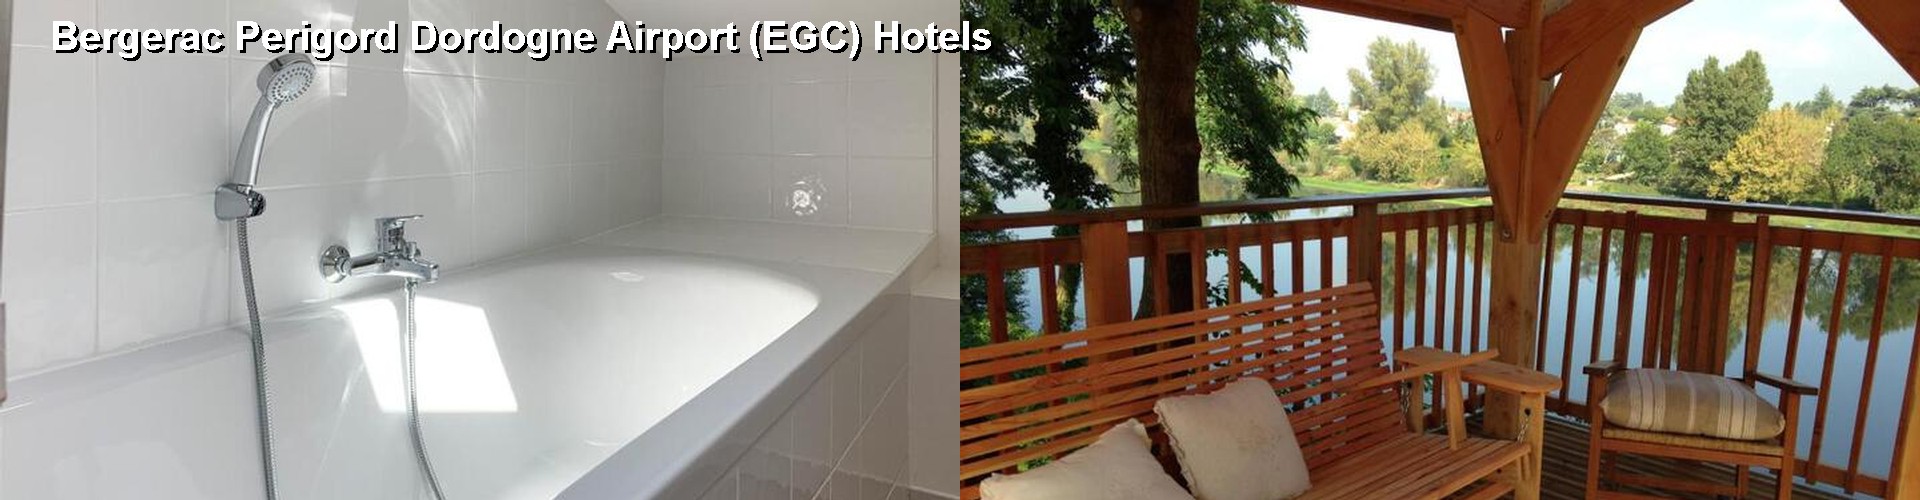 5 Best Hotels near Bergerac Perigord Dordogne Airport (EGC)